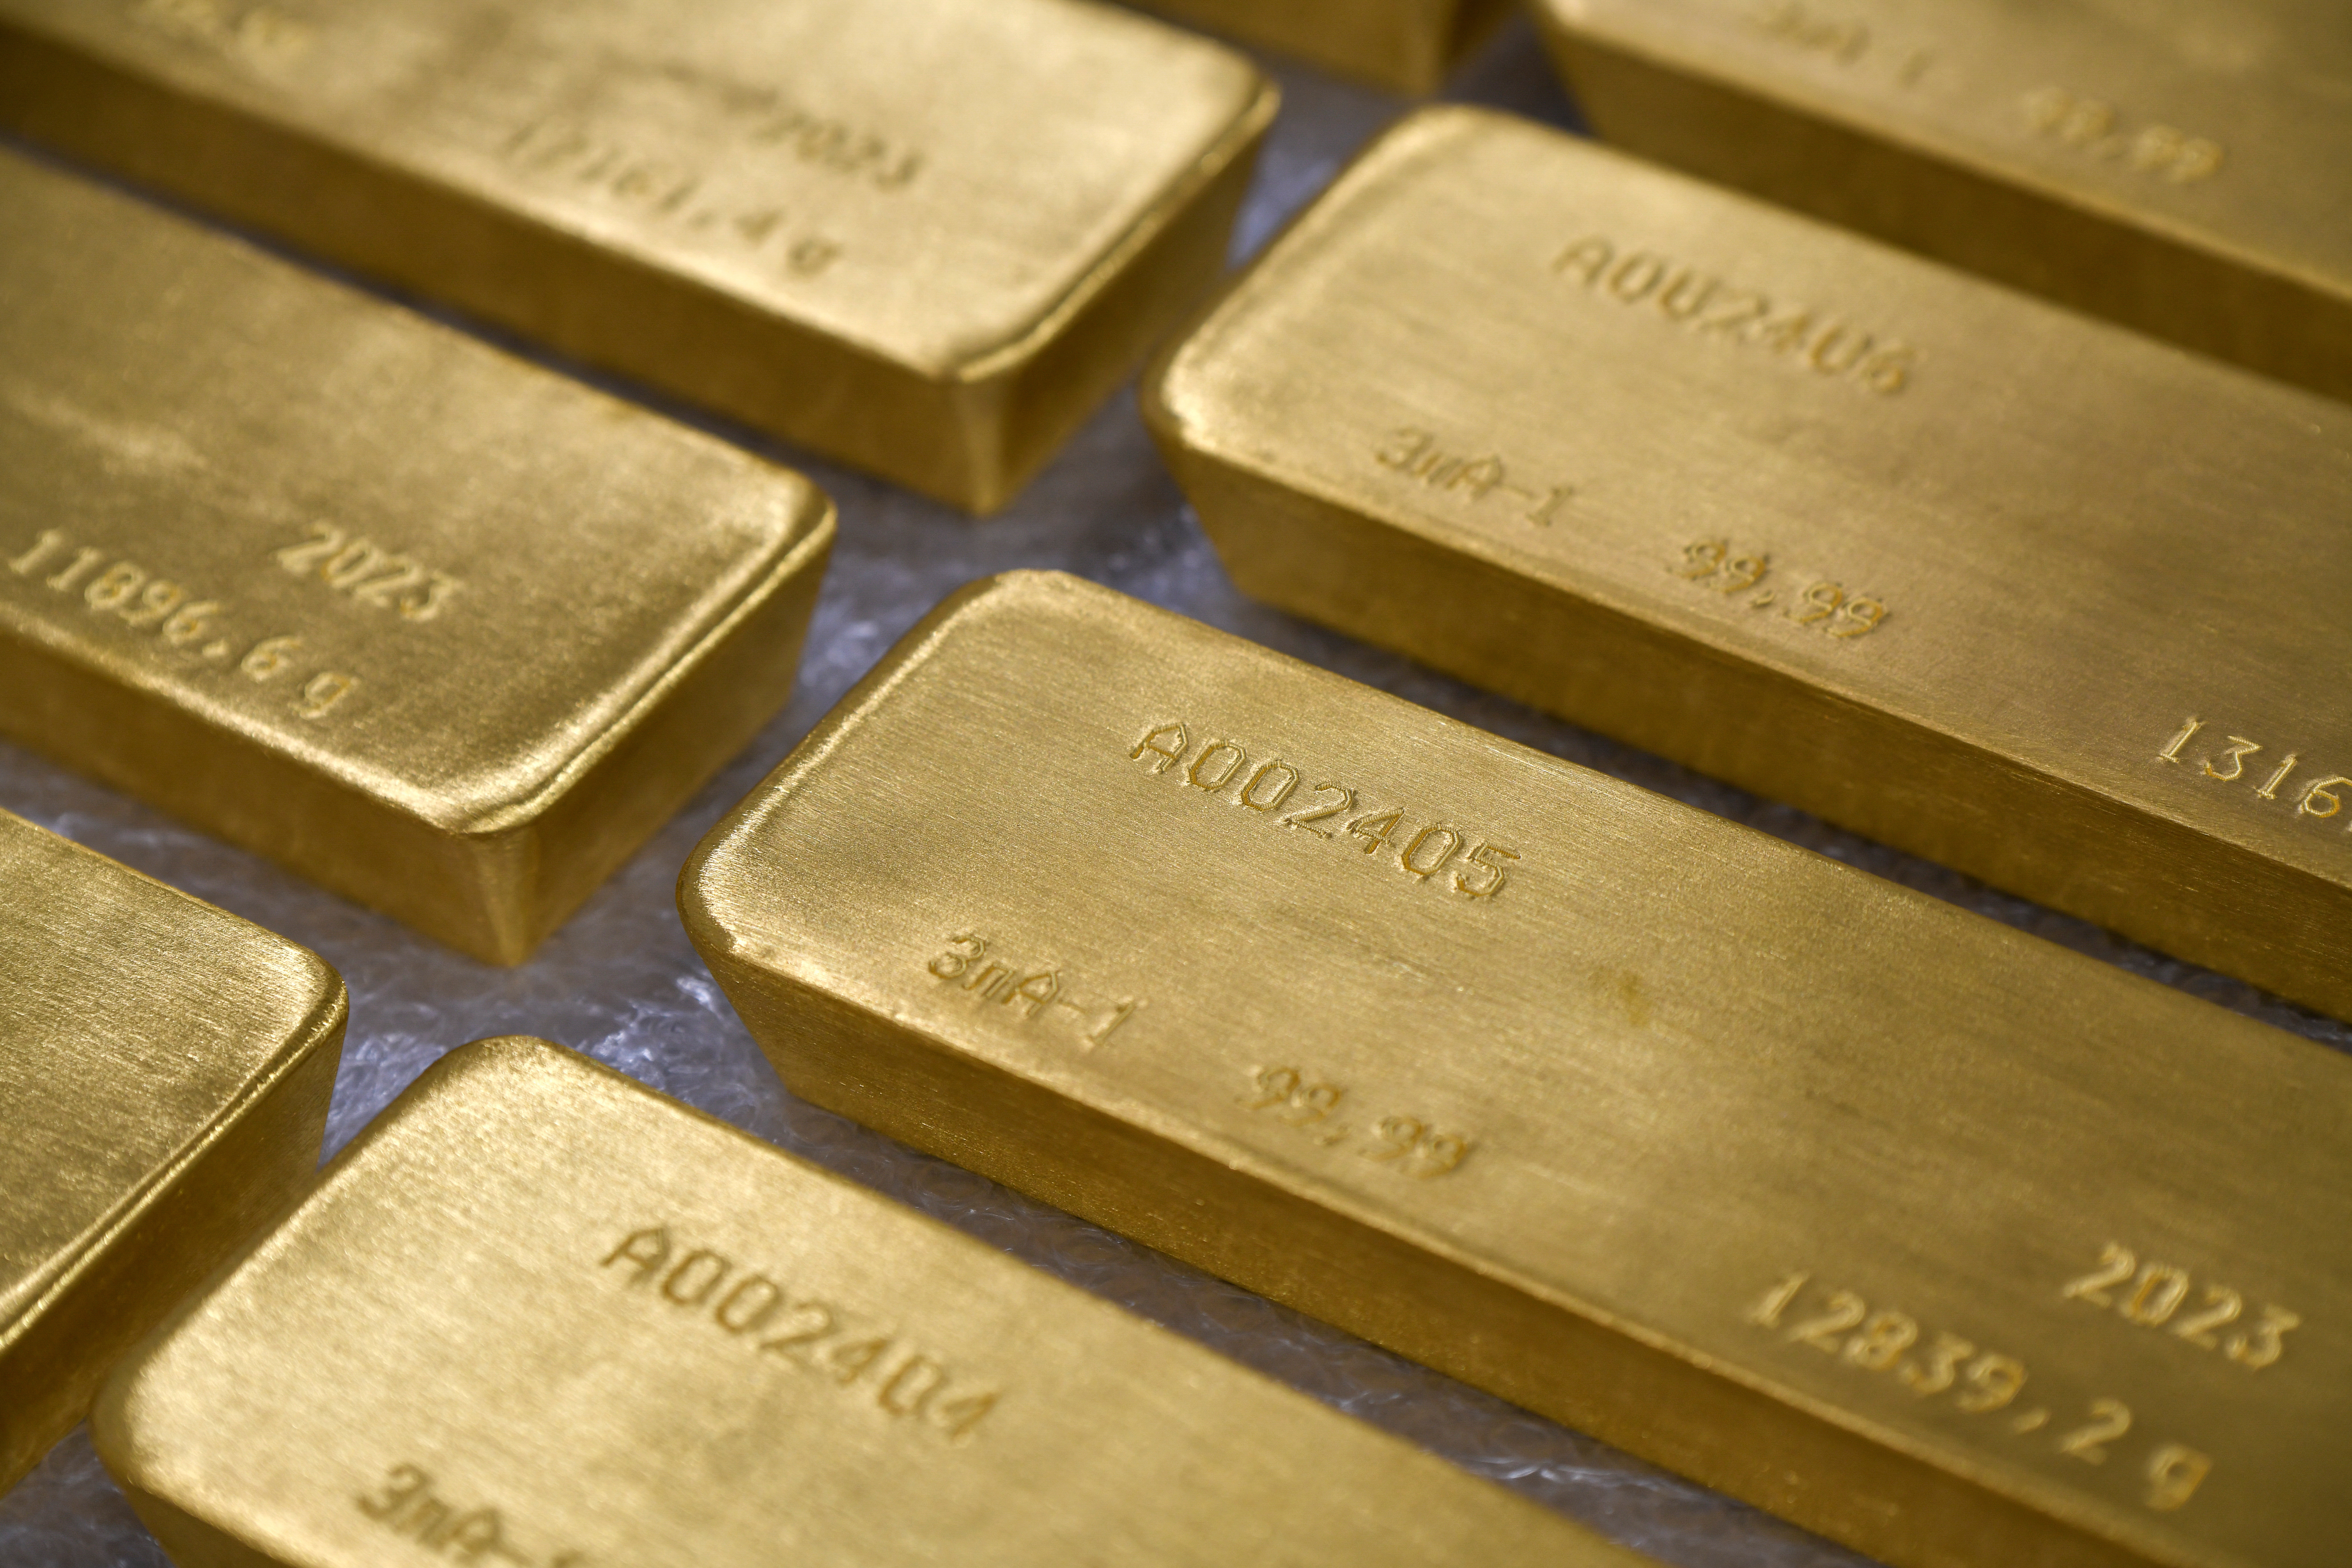 Production of gold at Krastsvetmet precious metals plant in Krasnoyarsk